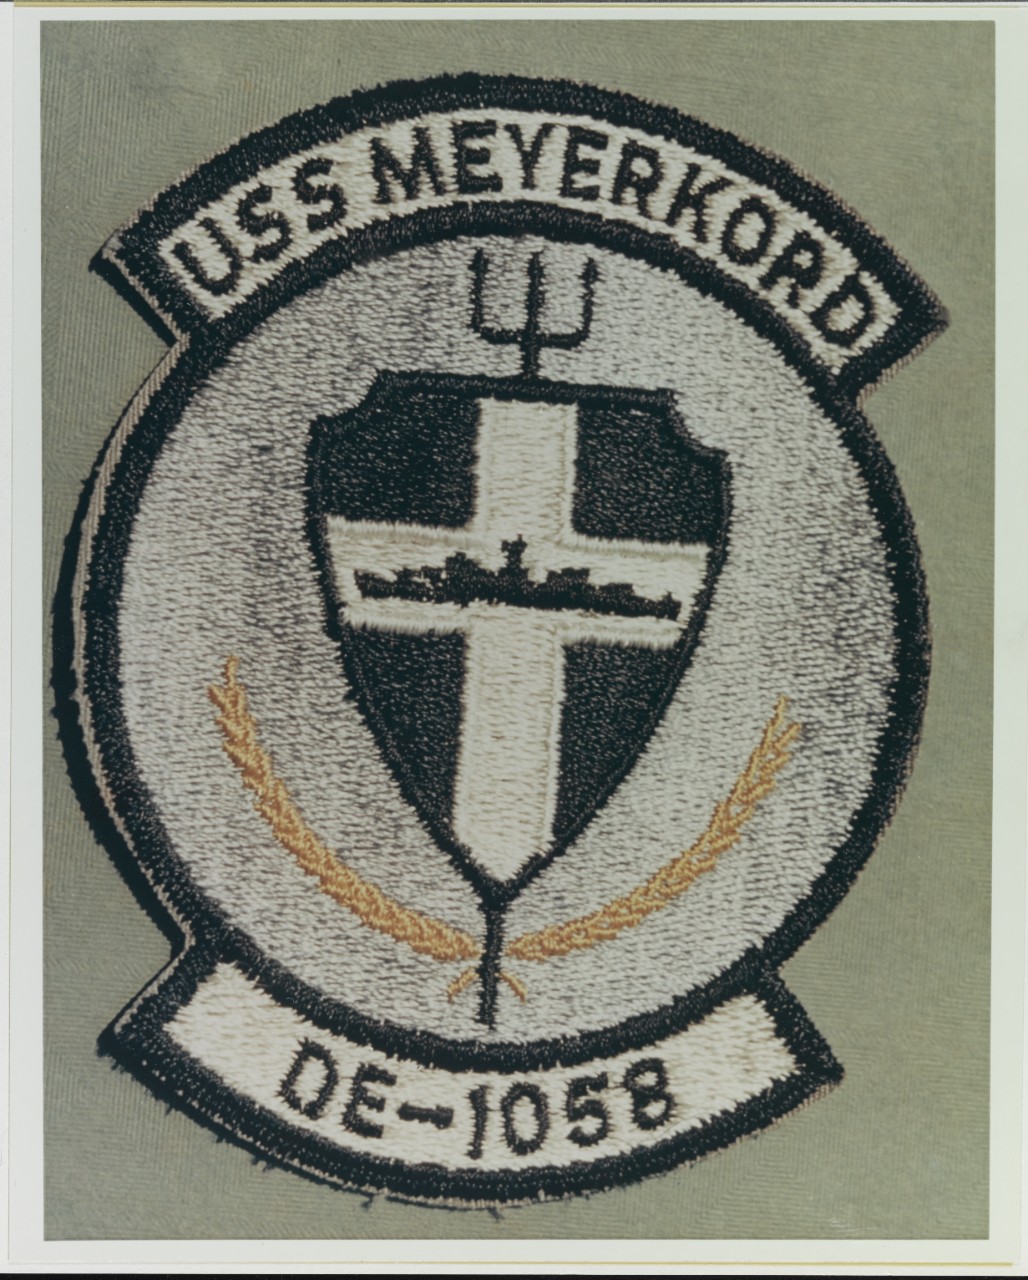 Insignia: USS MEYERKORD (DE-1058)